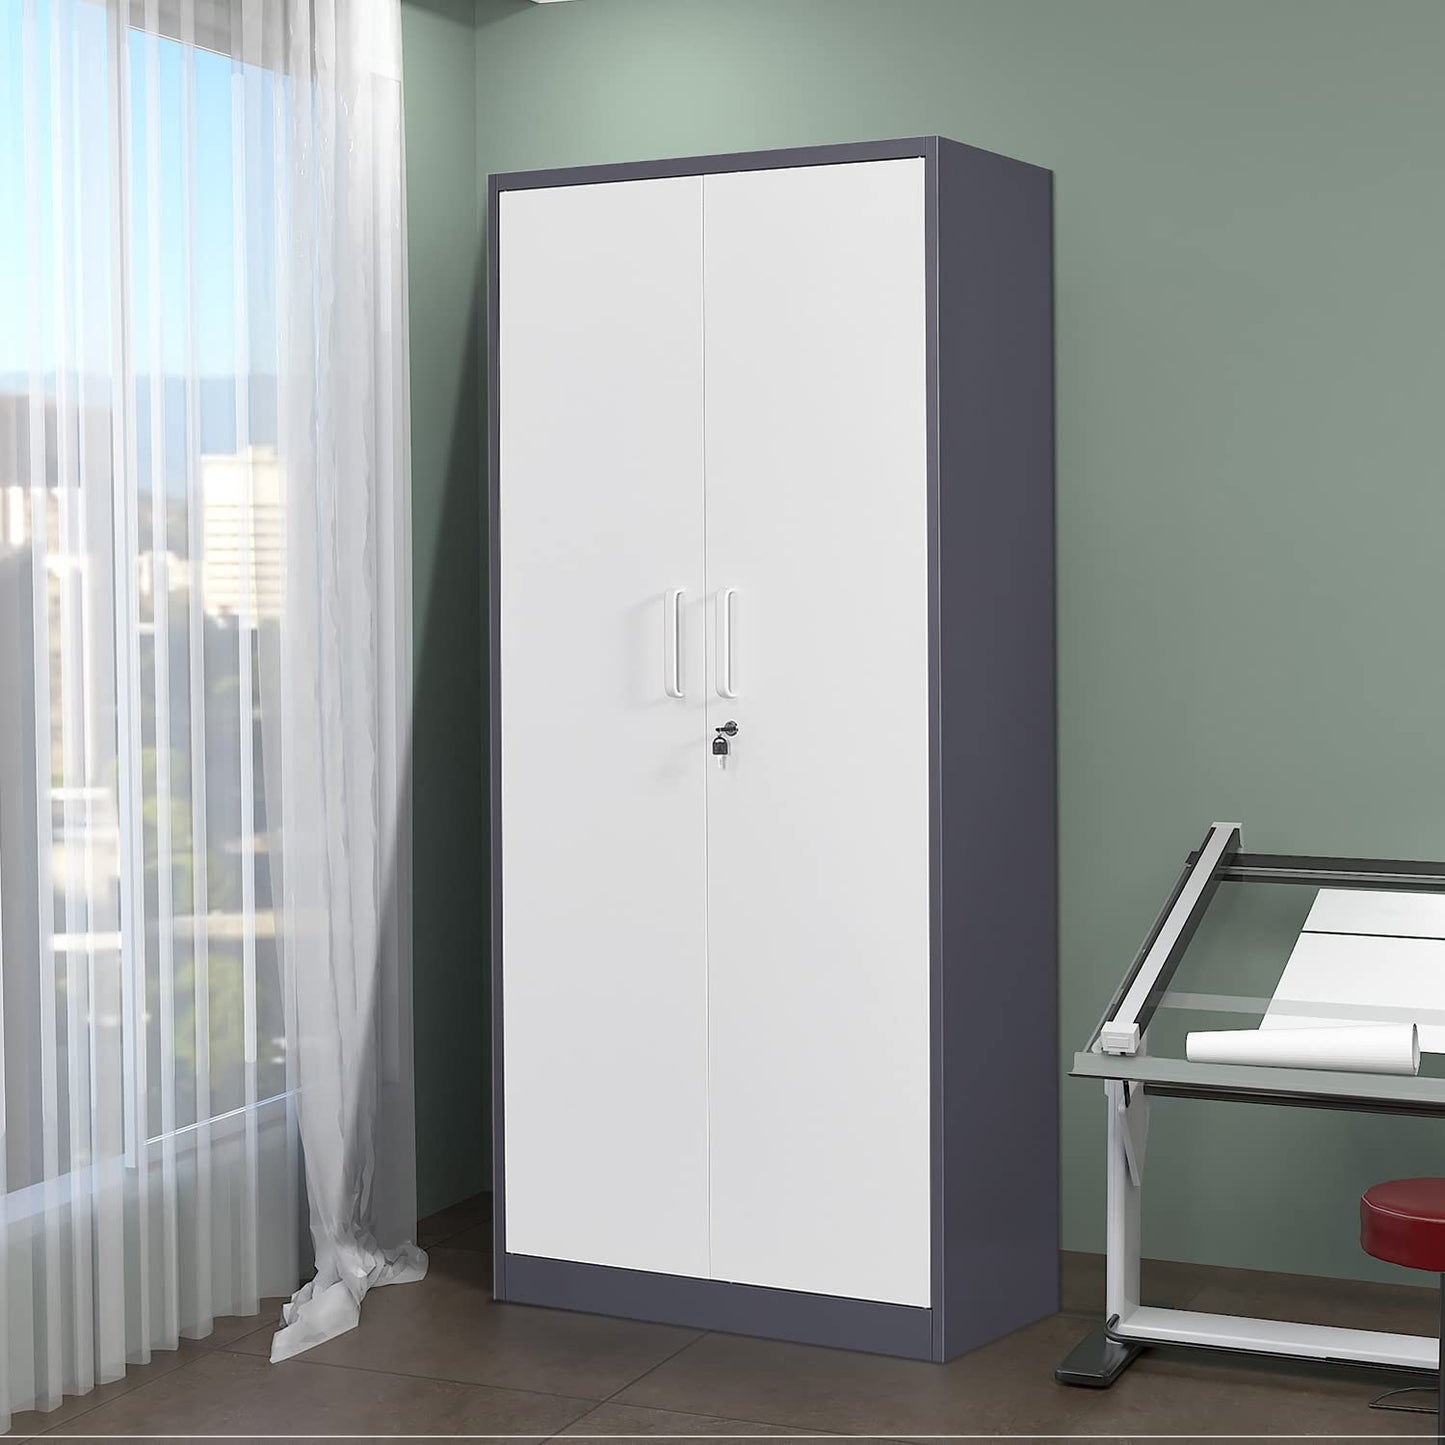 Anxxsu Metal Garage Storage Cabinet, 71" Locking Storage Cabinet with 2 Doors and 4 Adjustable Shelves, Lockable Metal Cabinet for